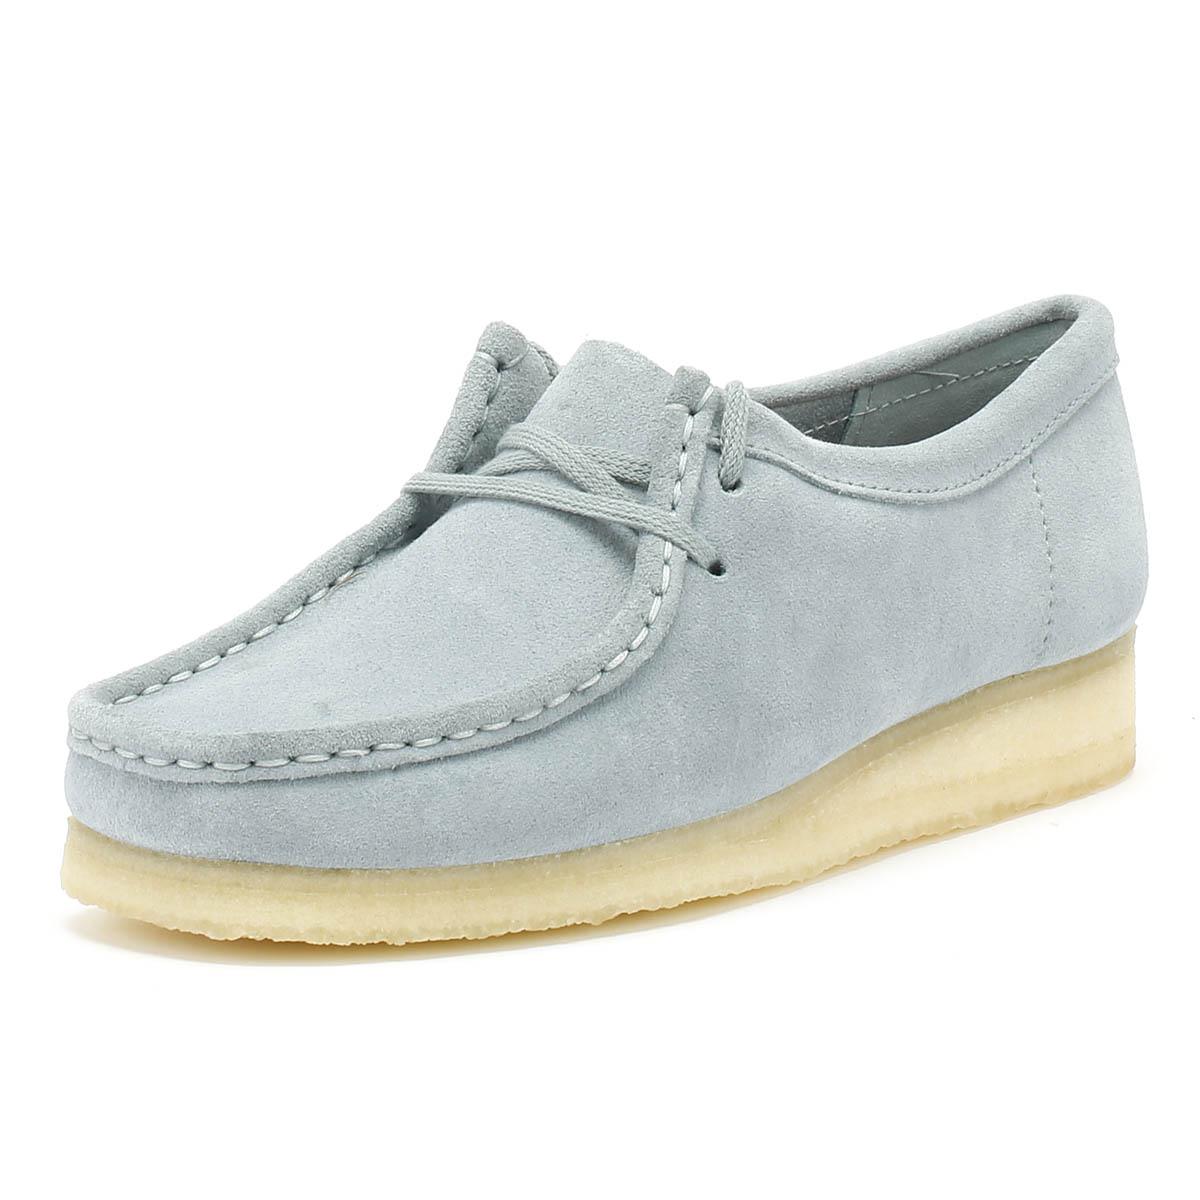 Clarks Originals Womens Blue / Grey Wallabee Suede Shoes - Lyst